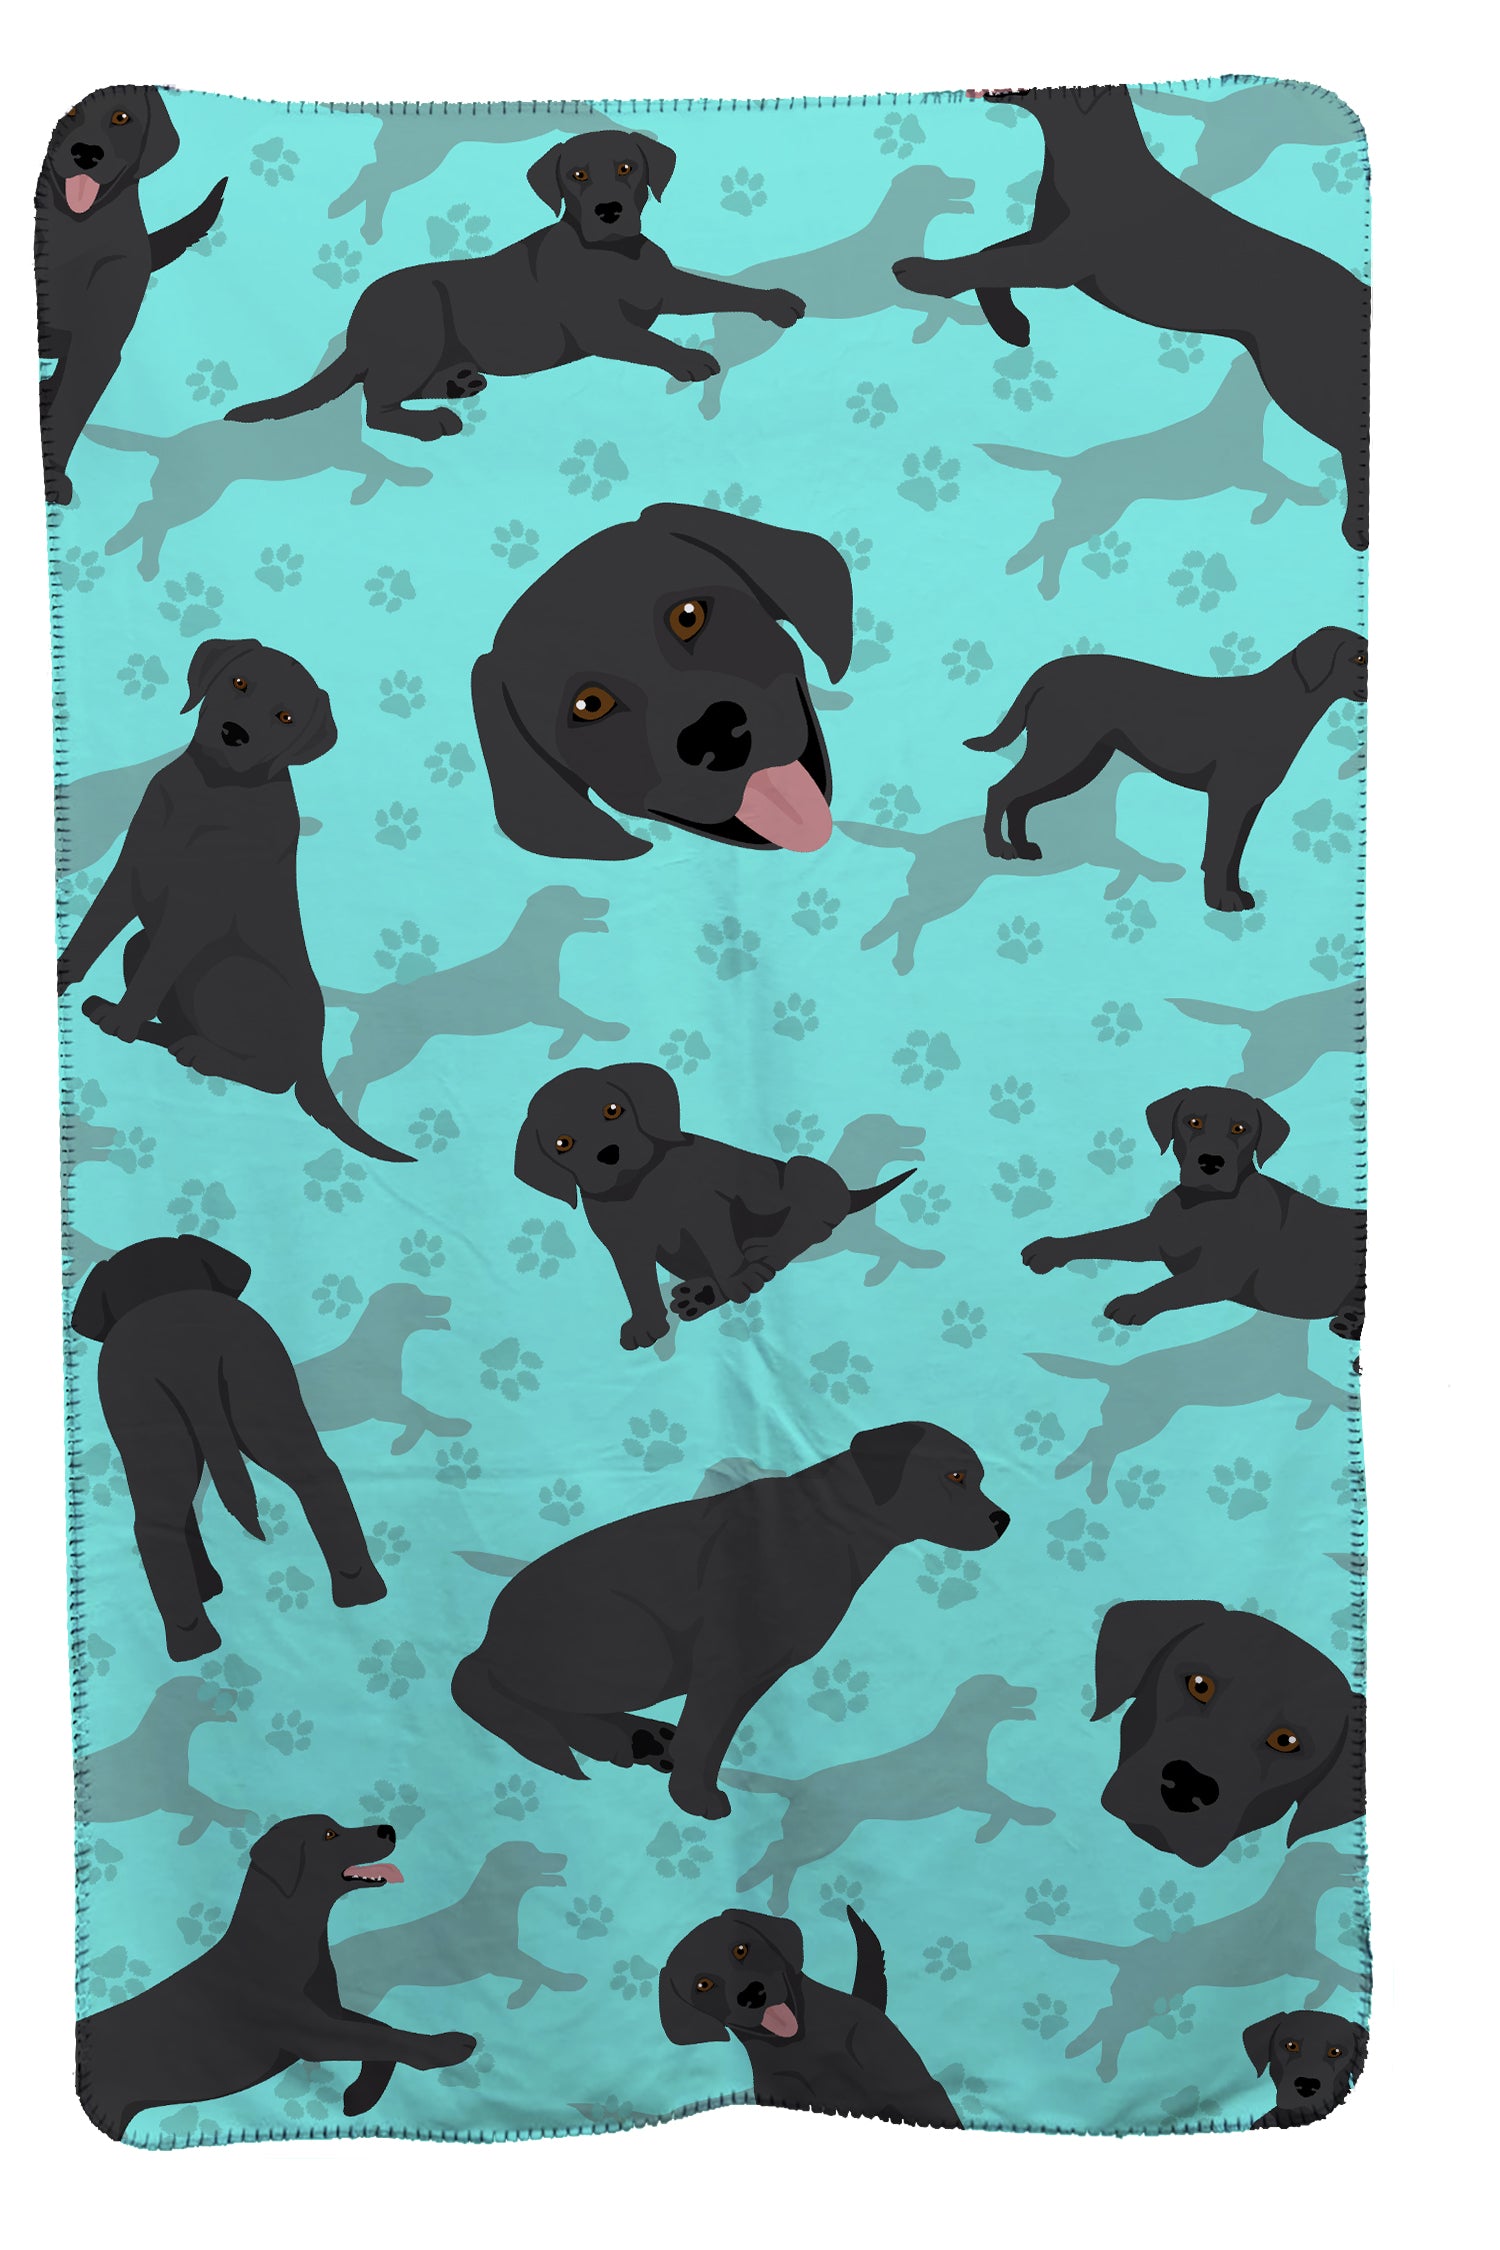 Buy this Black Labrador Retriever Soft Travel Blanket with Bag